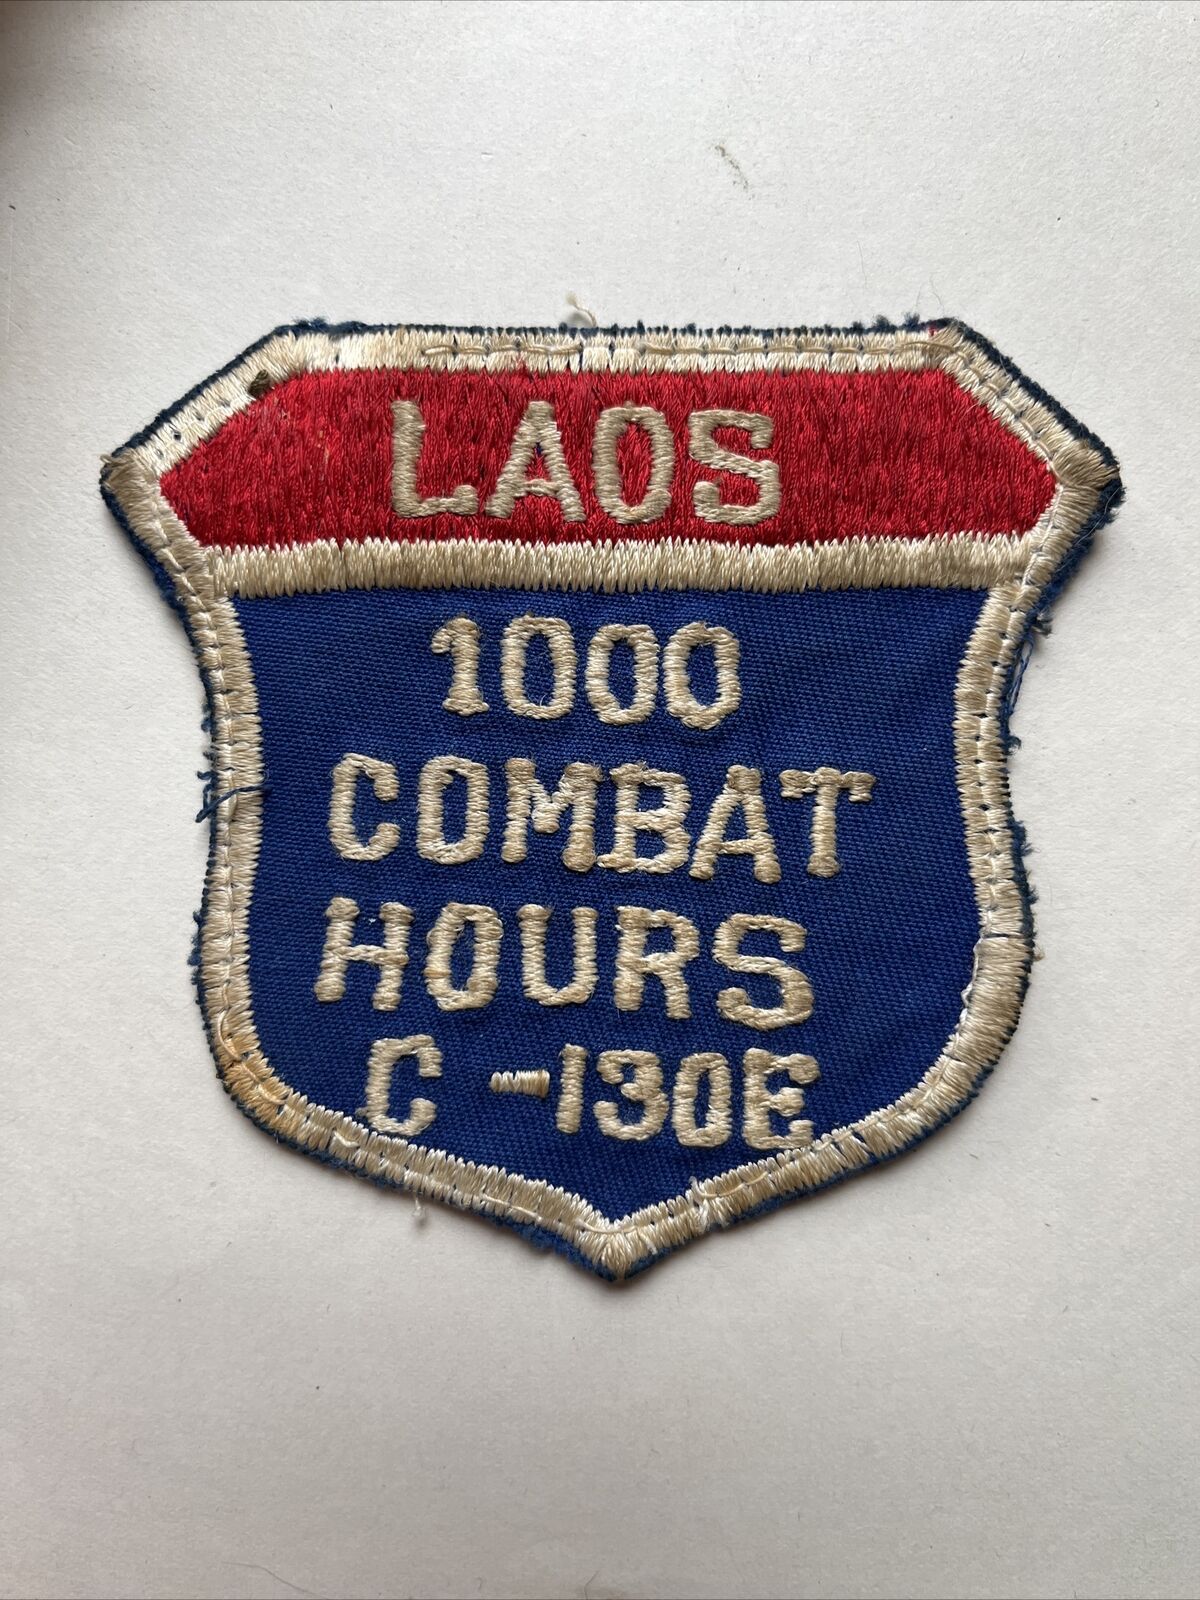 Guaranteed Original Vietnam War Thai Made USAF 1000 Laos Missions C-130 E Patch